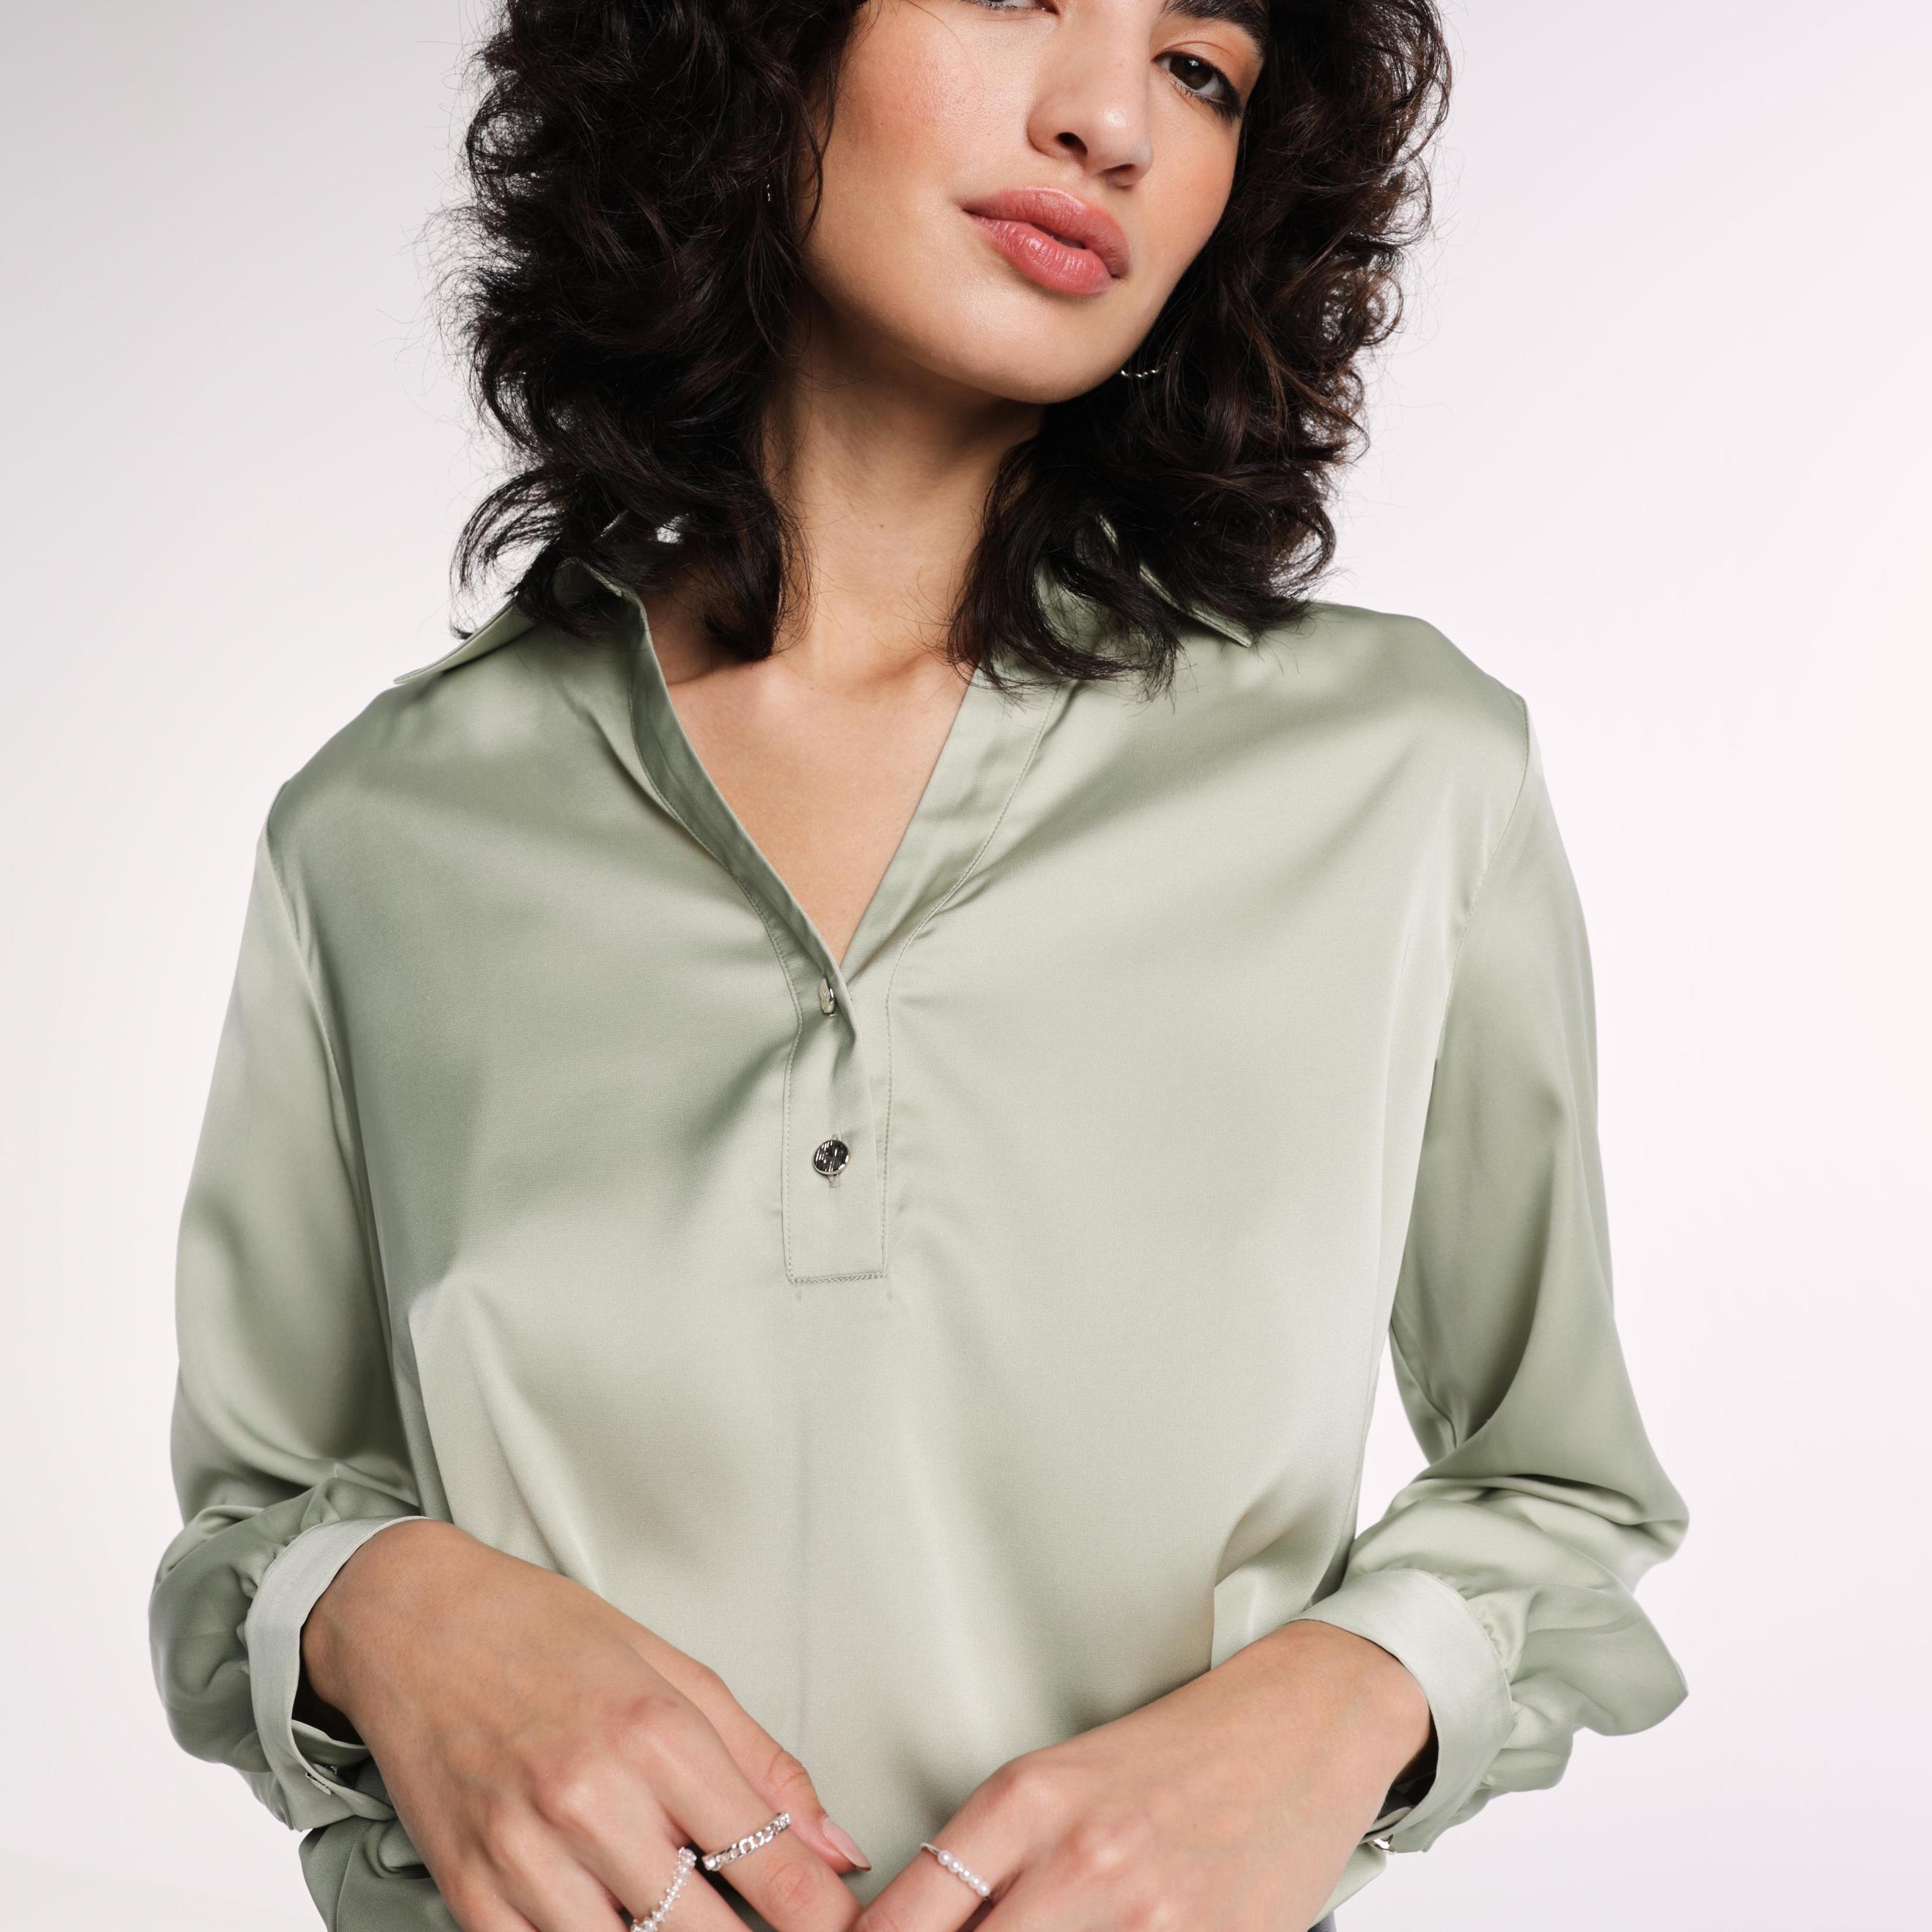 Oferta de Basic blouse por 9,99€ en New Yorker